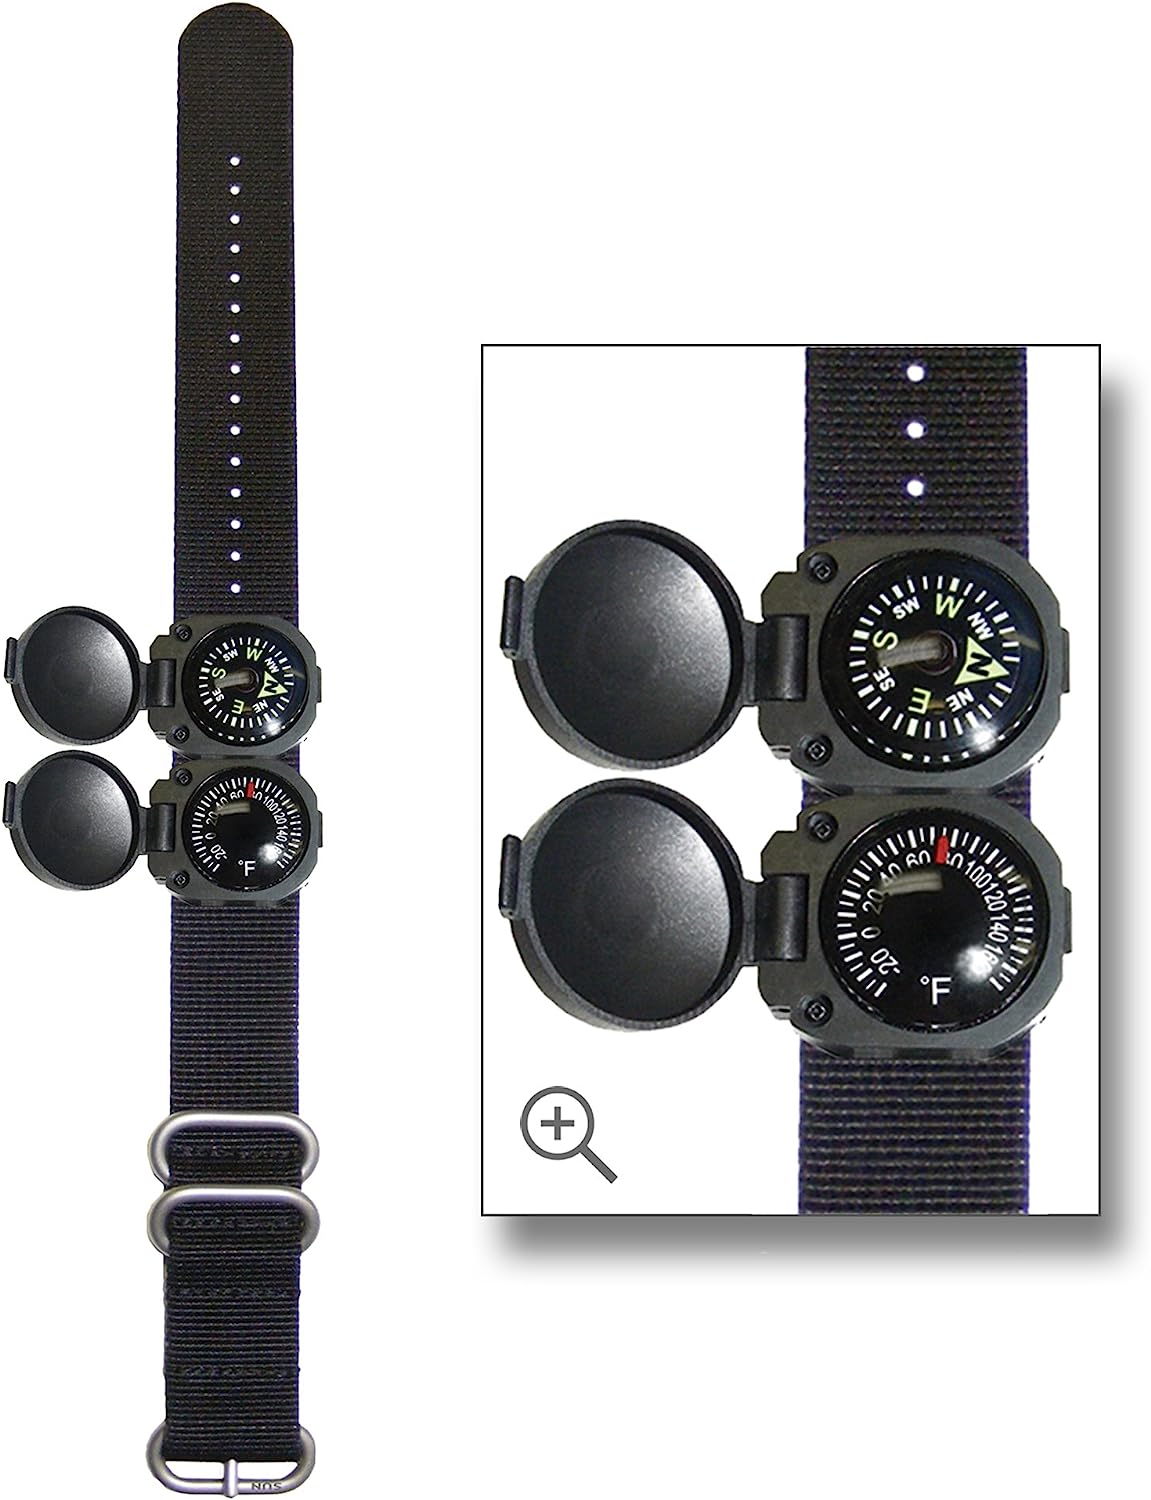 Sun Company ArmArmour 3 - Shielded Wrist Compass and [...]